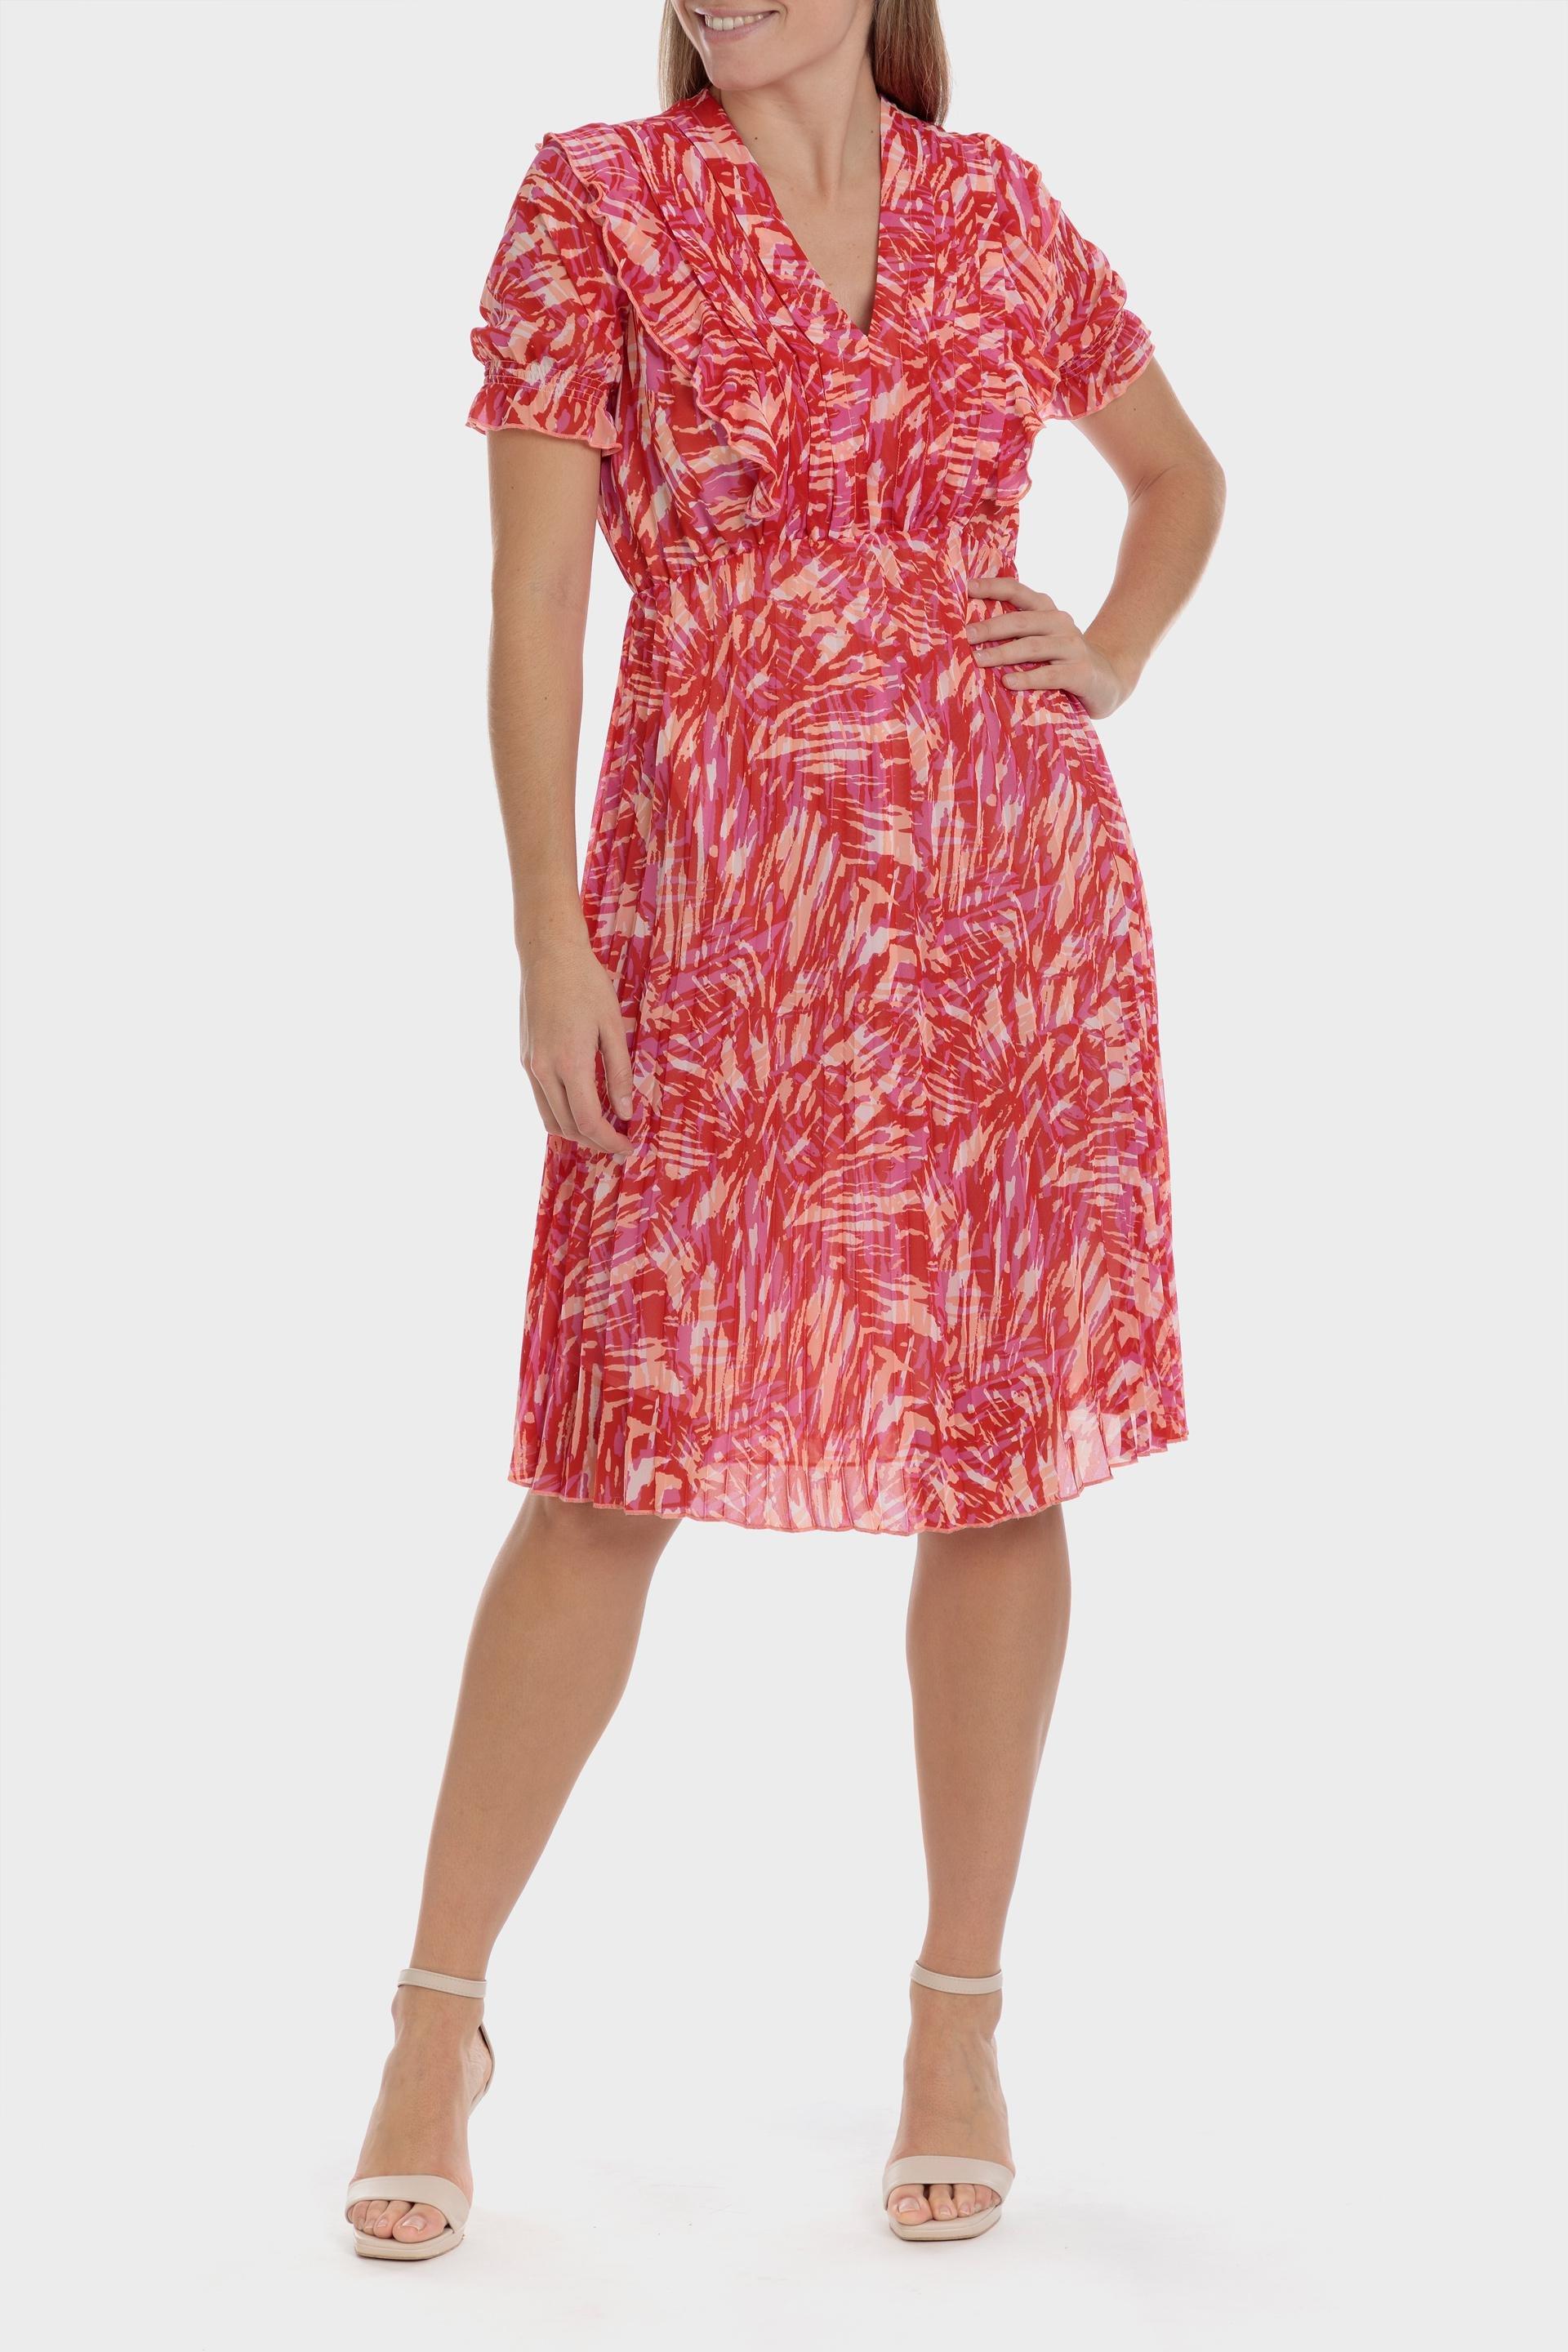 Punt Roma - Red Printed Dress